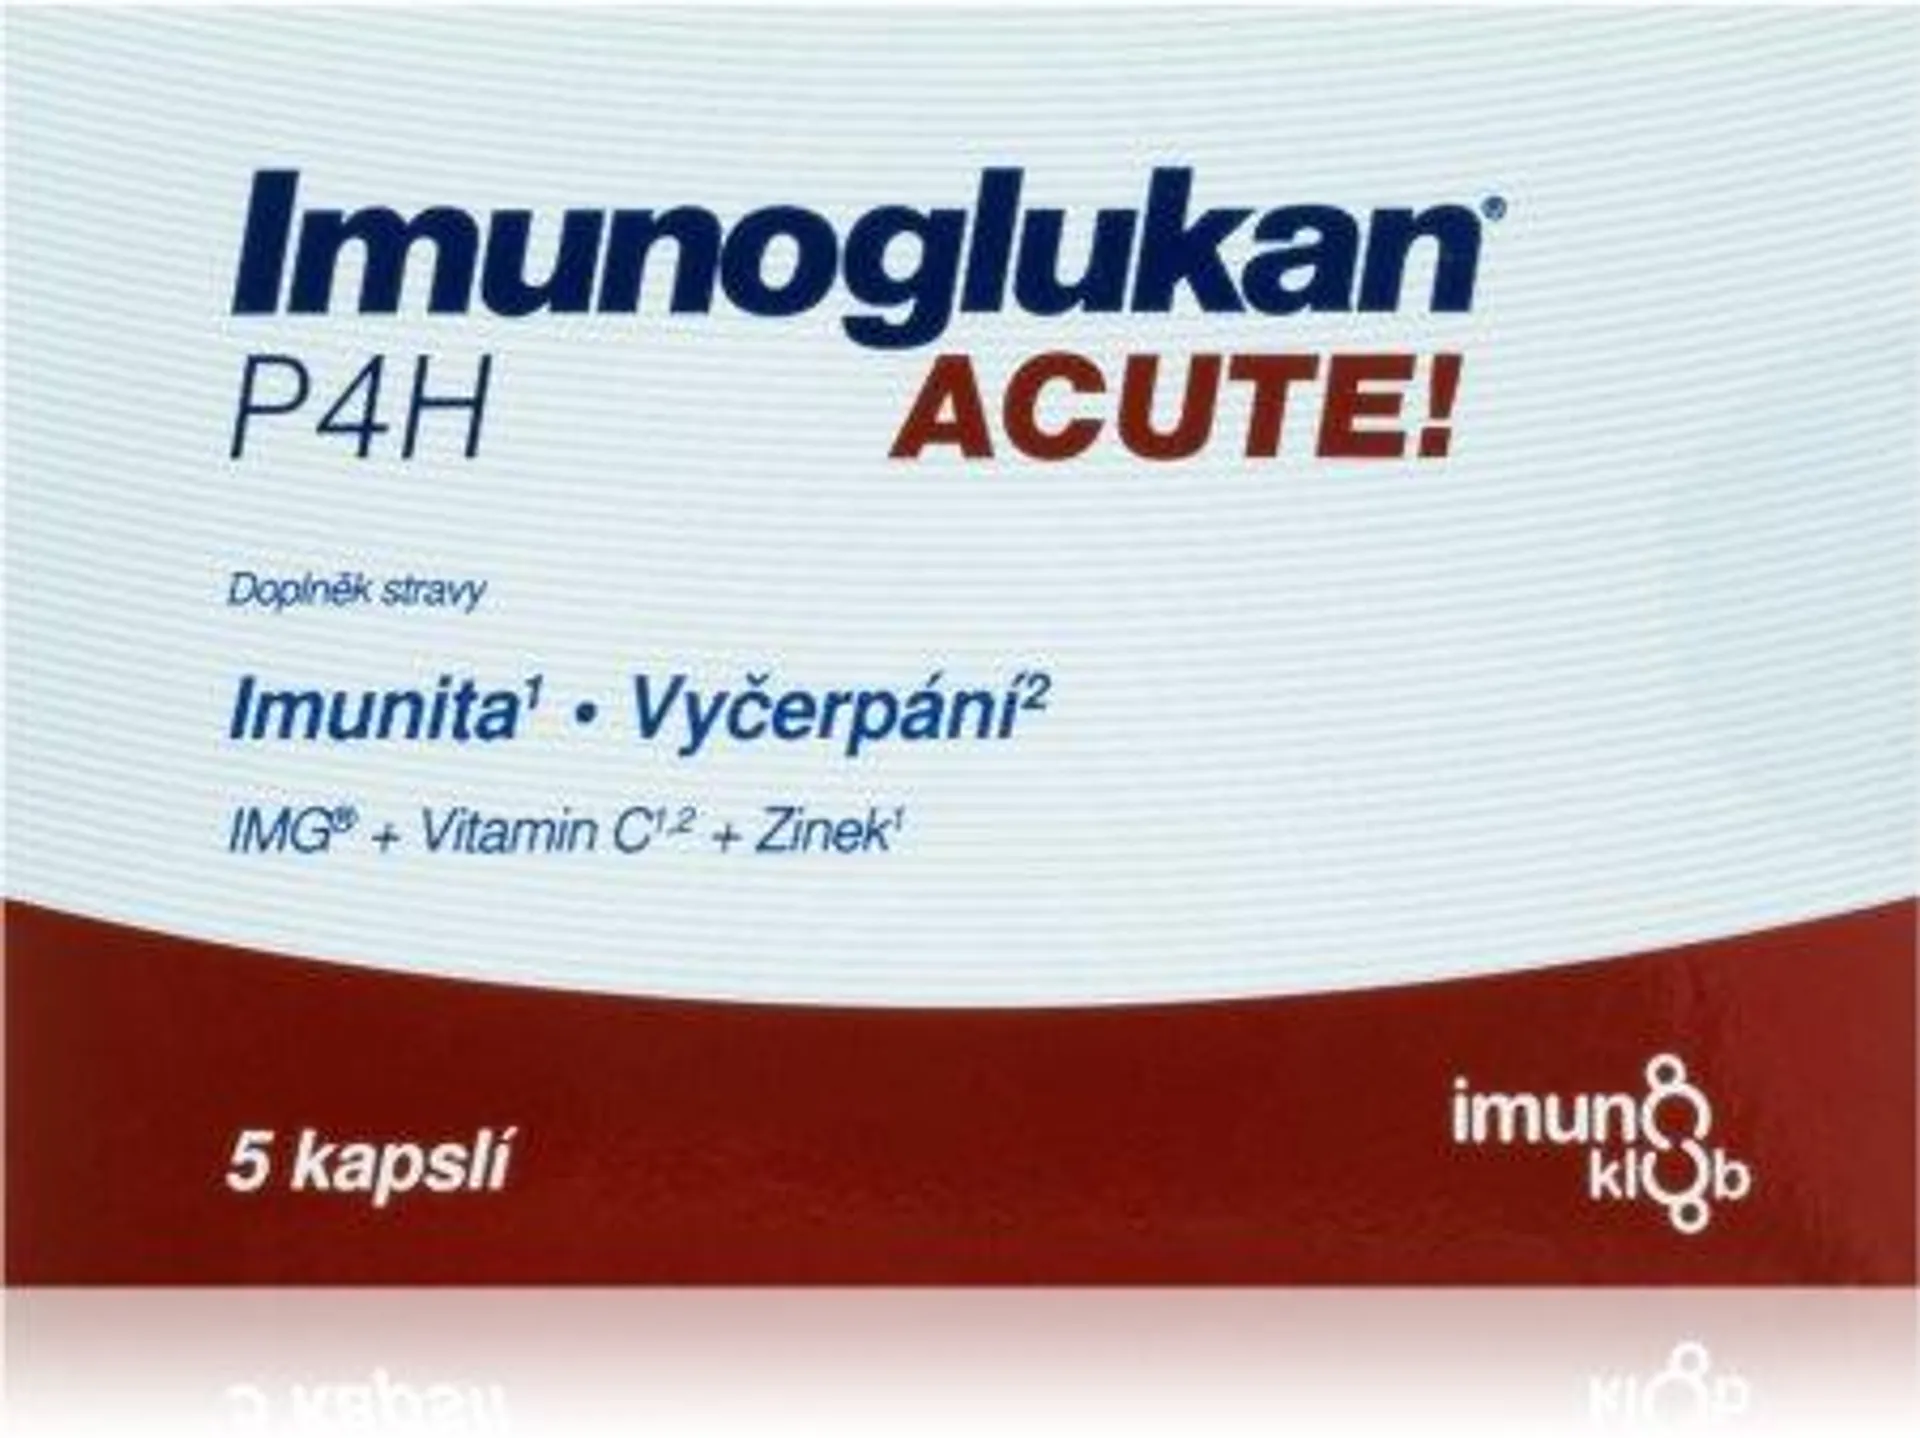 Imunoglukan P4H ACUTE! 300 mg